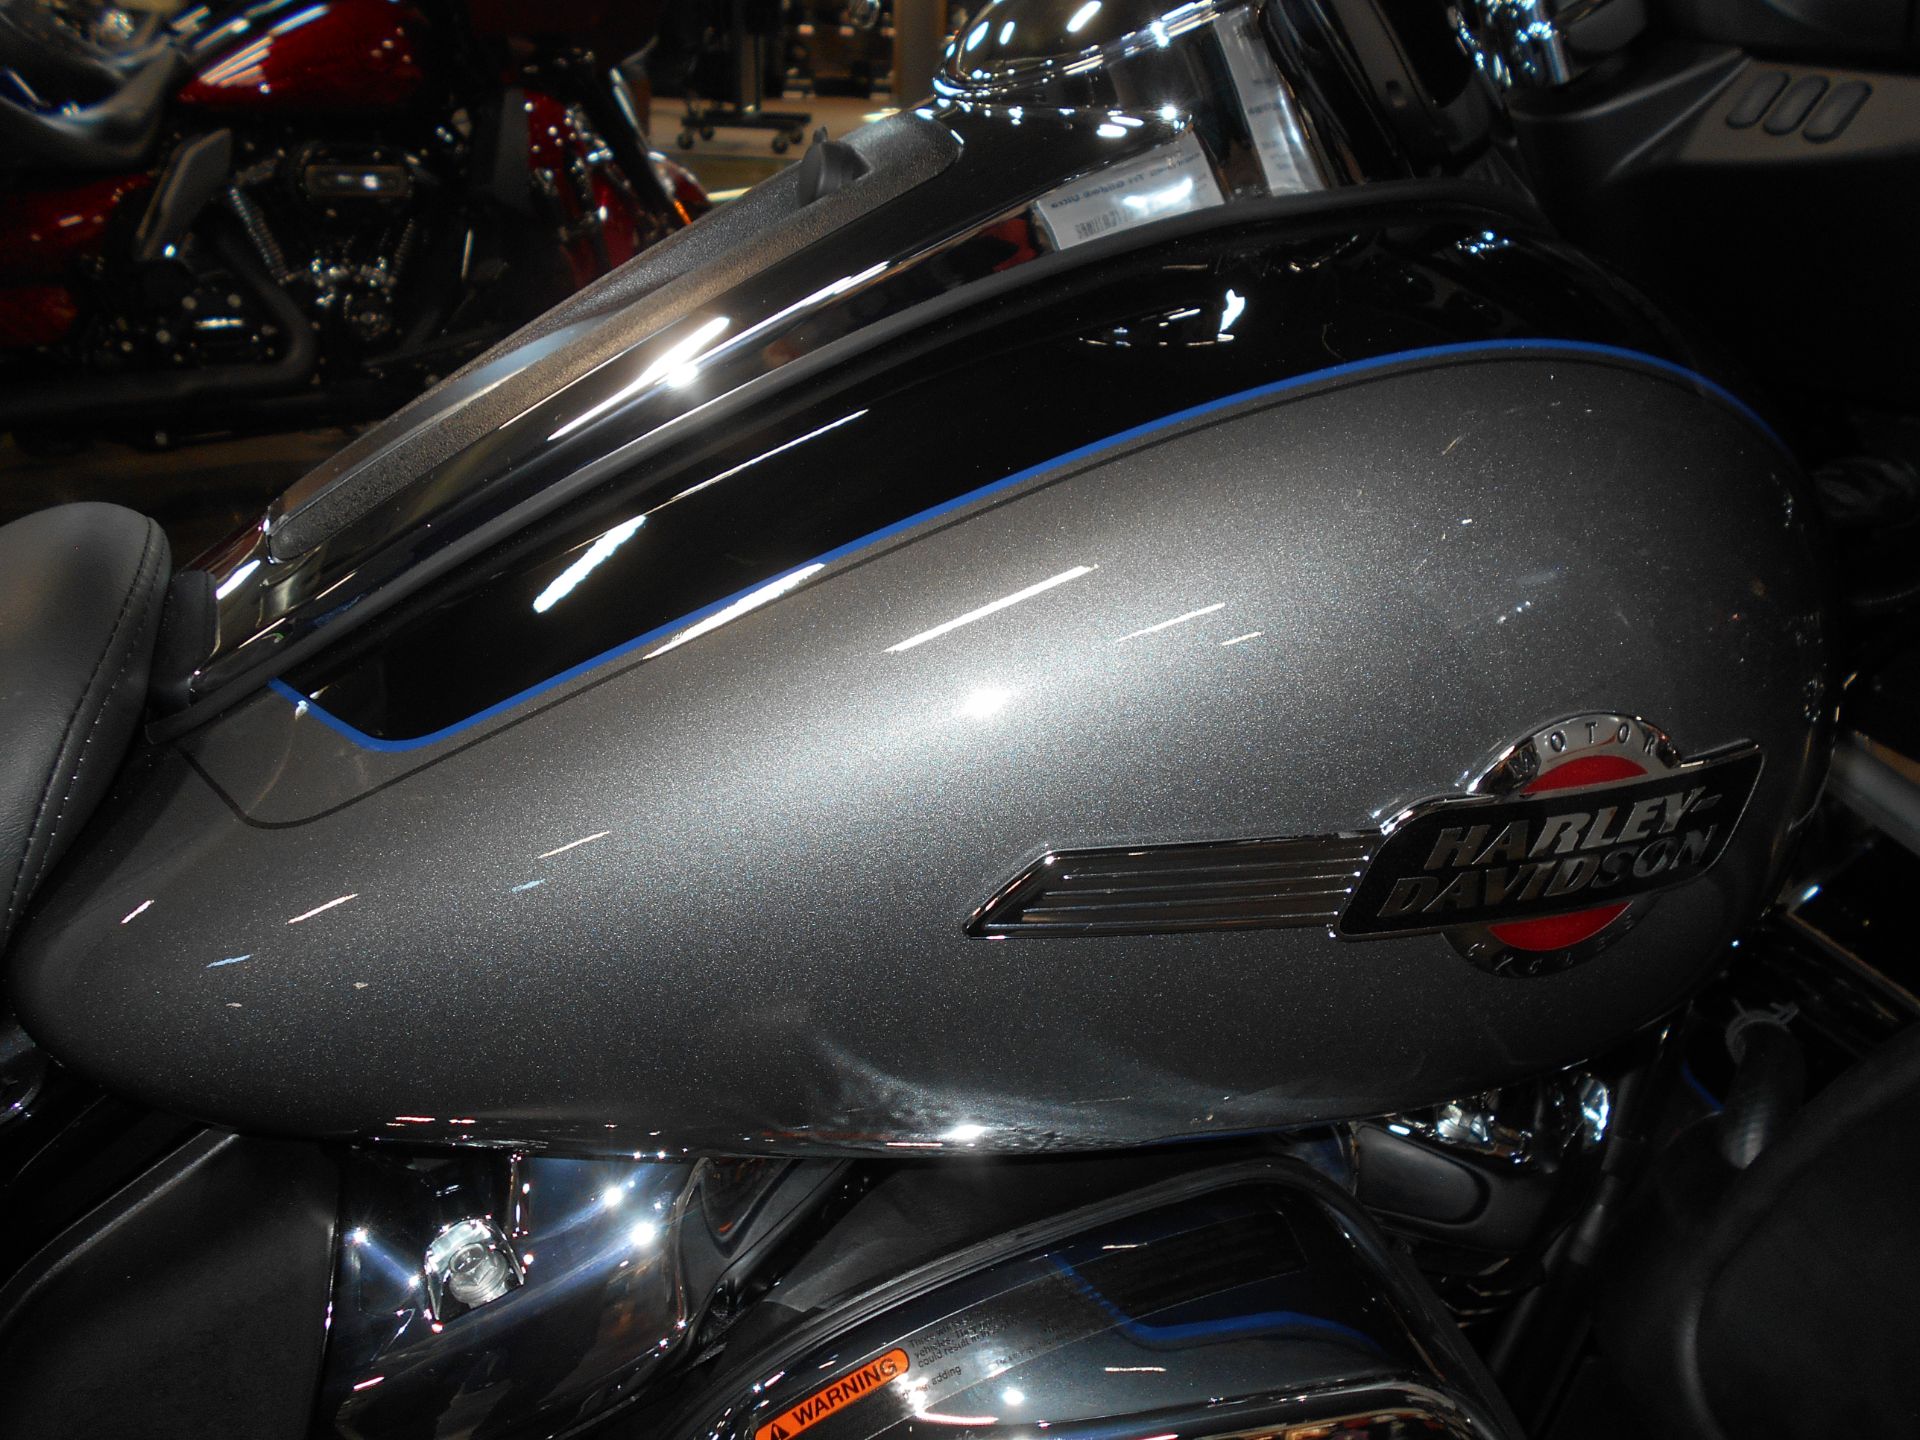 2022 Harley-Davidson Tri Glide® Ultra in Mauston, Wisconsin - Photo 2